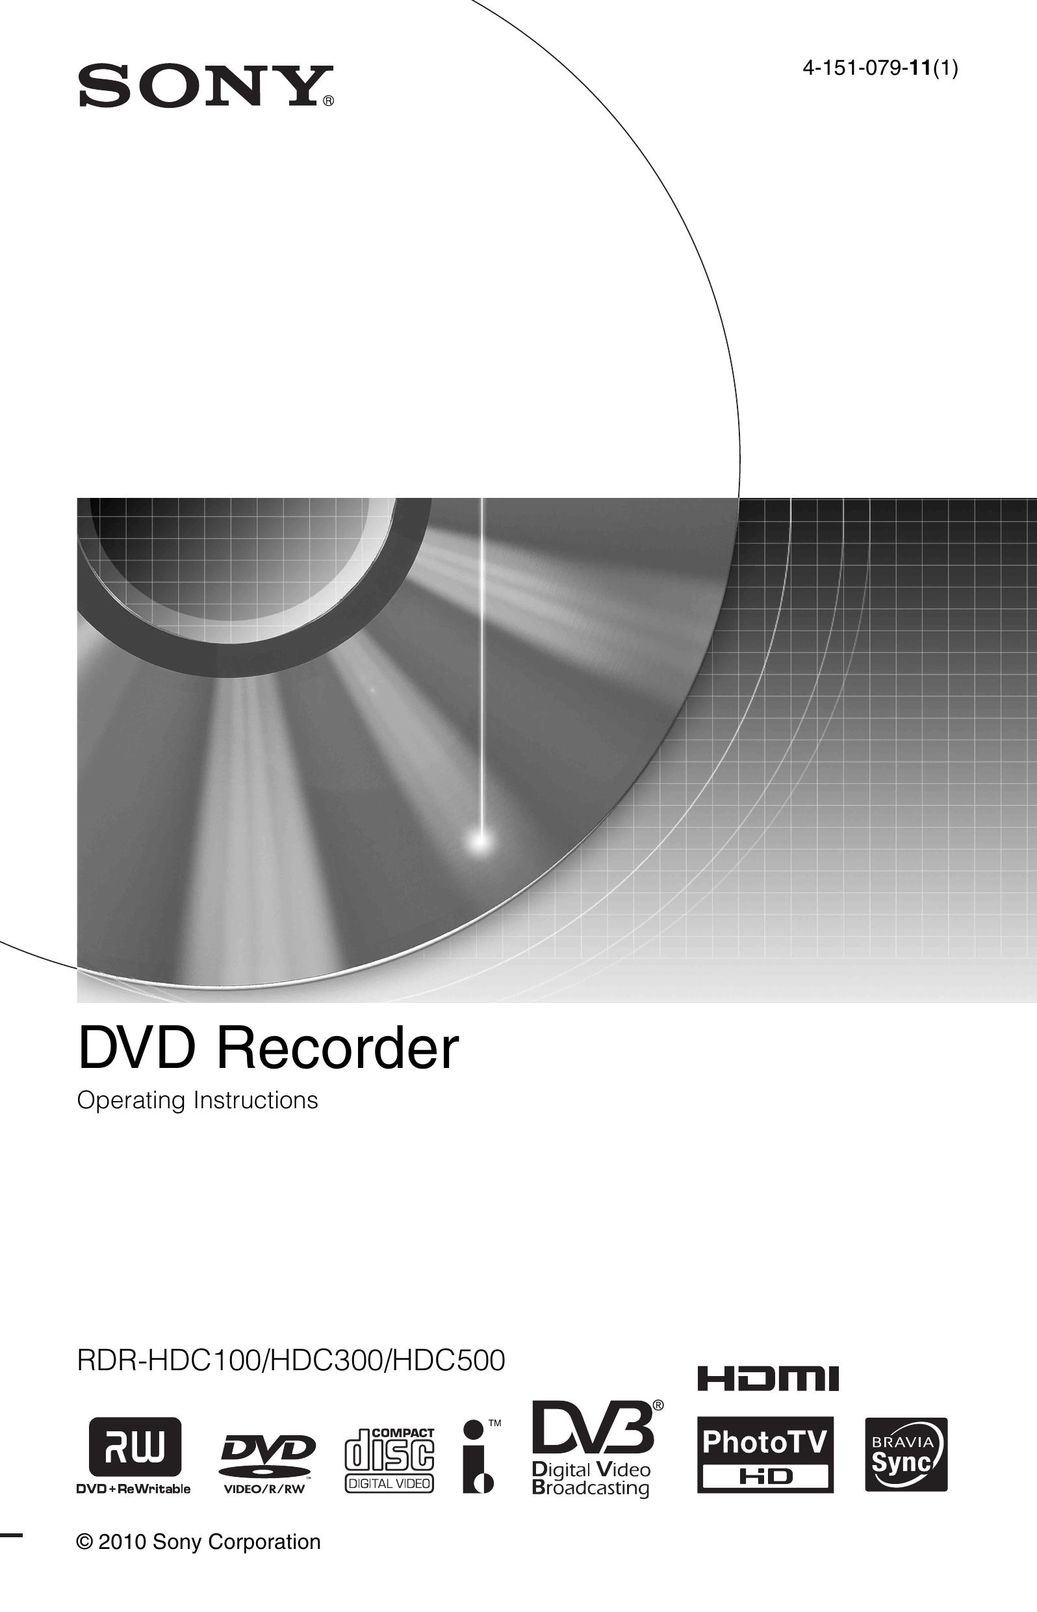 Sony 4-151-079-11(1) DVD Recorder User Manual